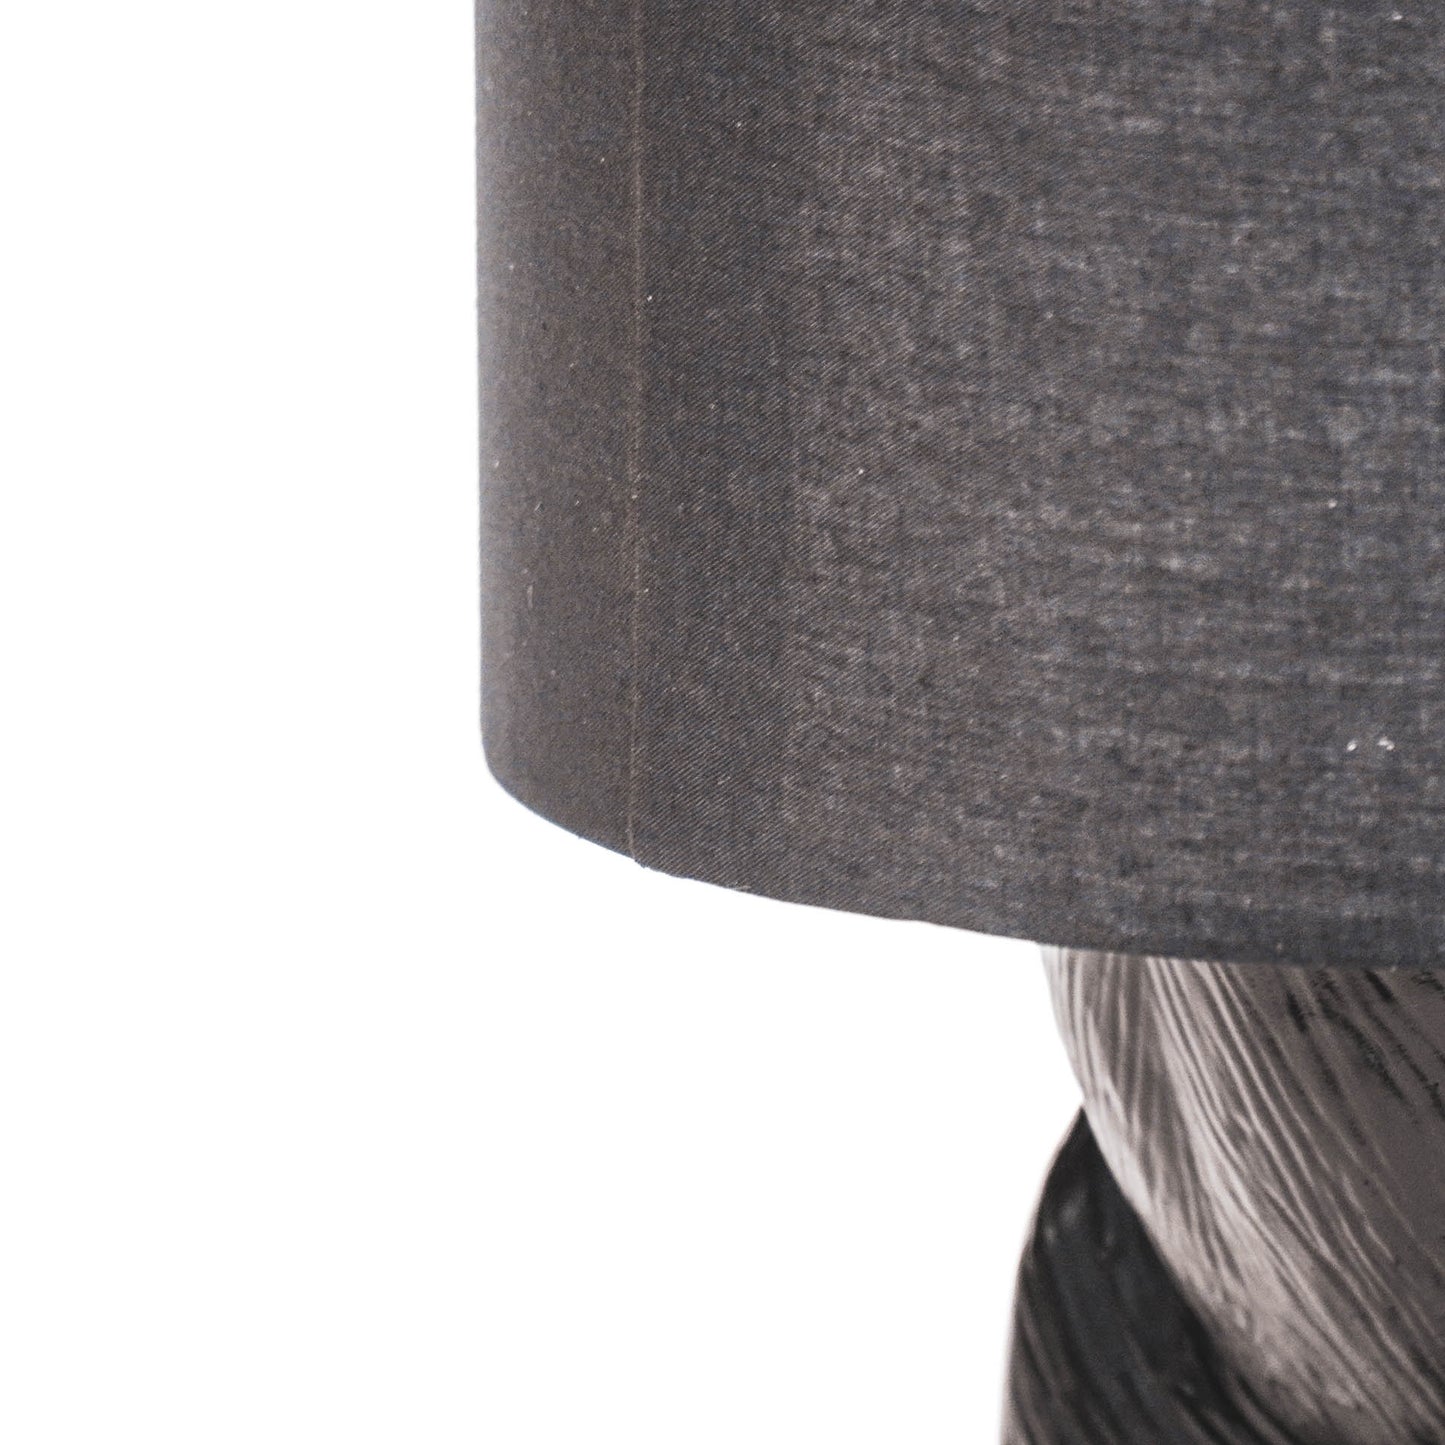 Housevitamin Lamp Meerkat - Black - 20x70x20cm